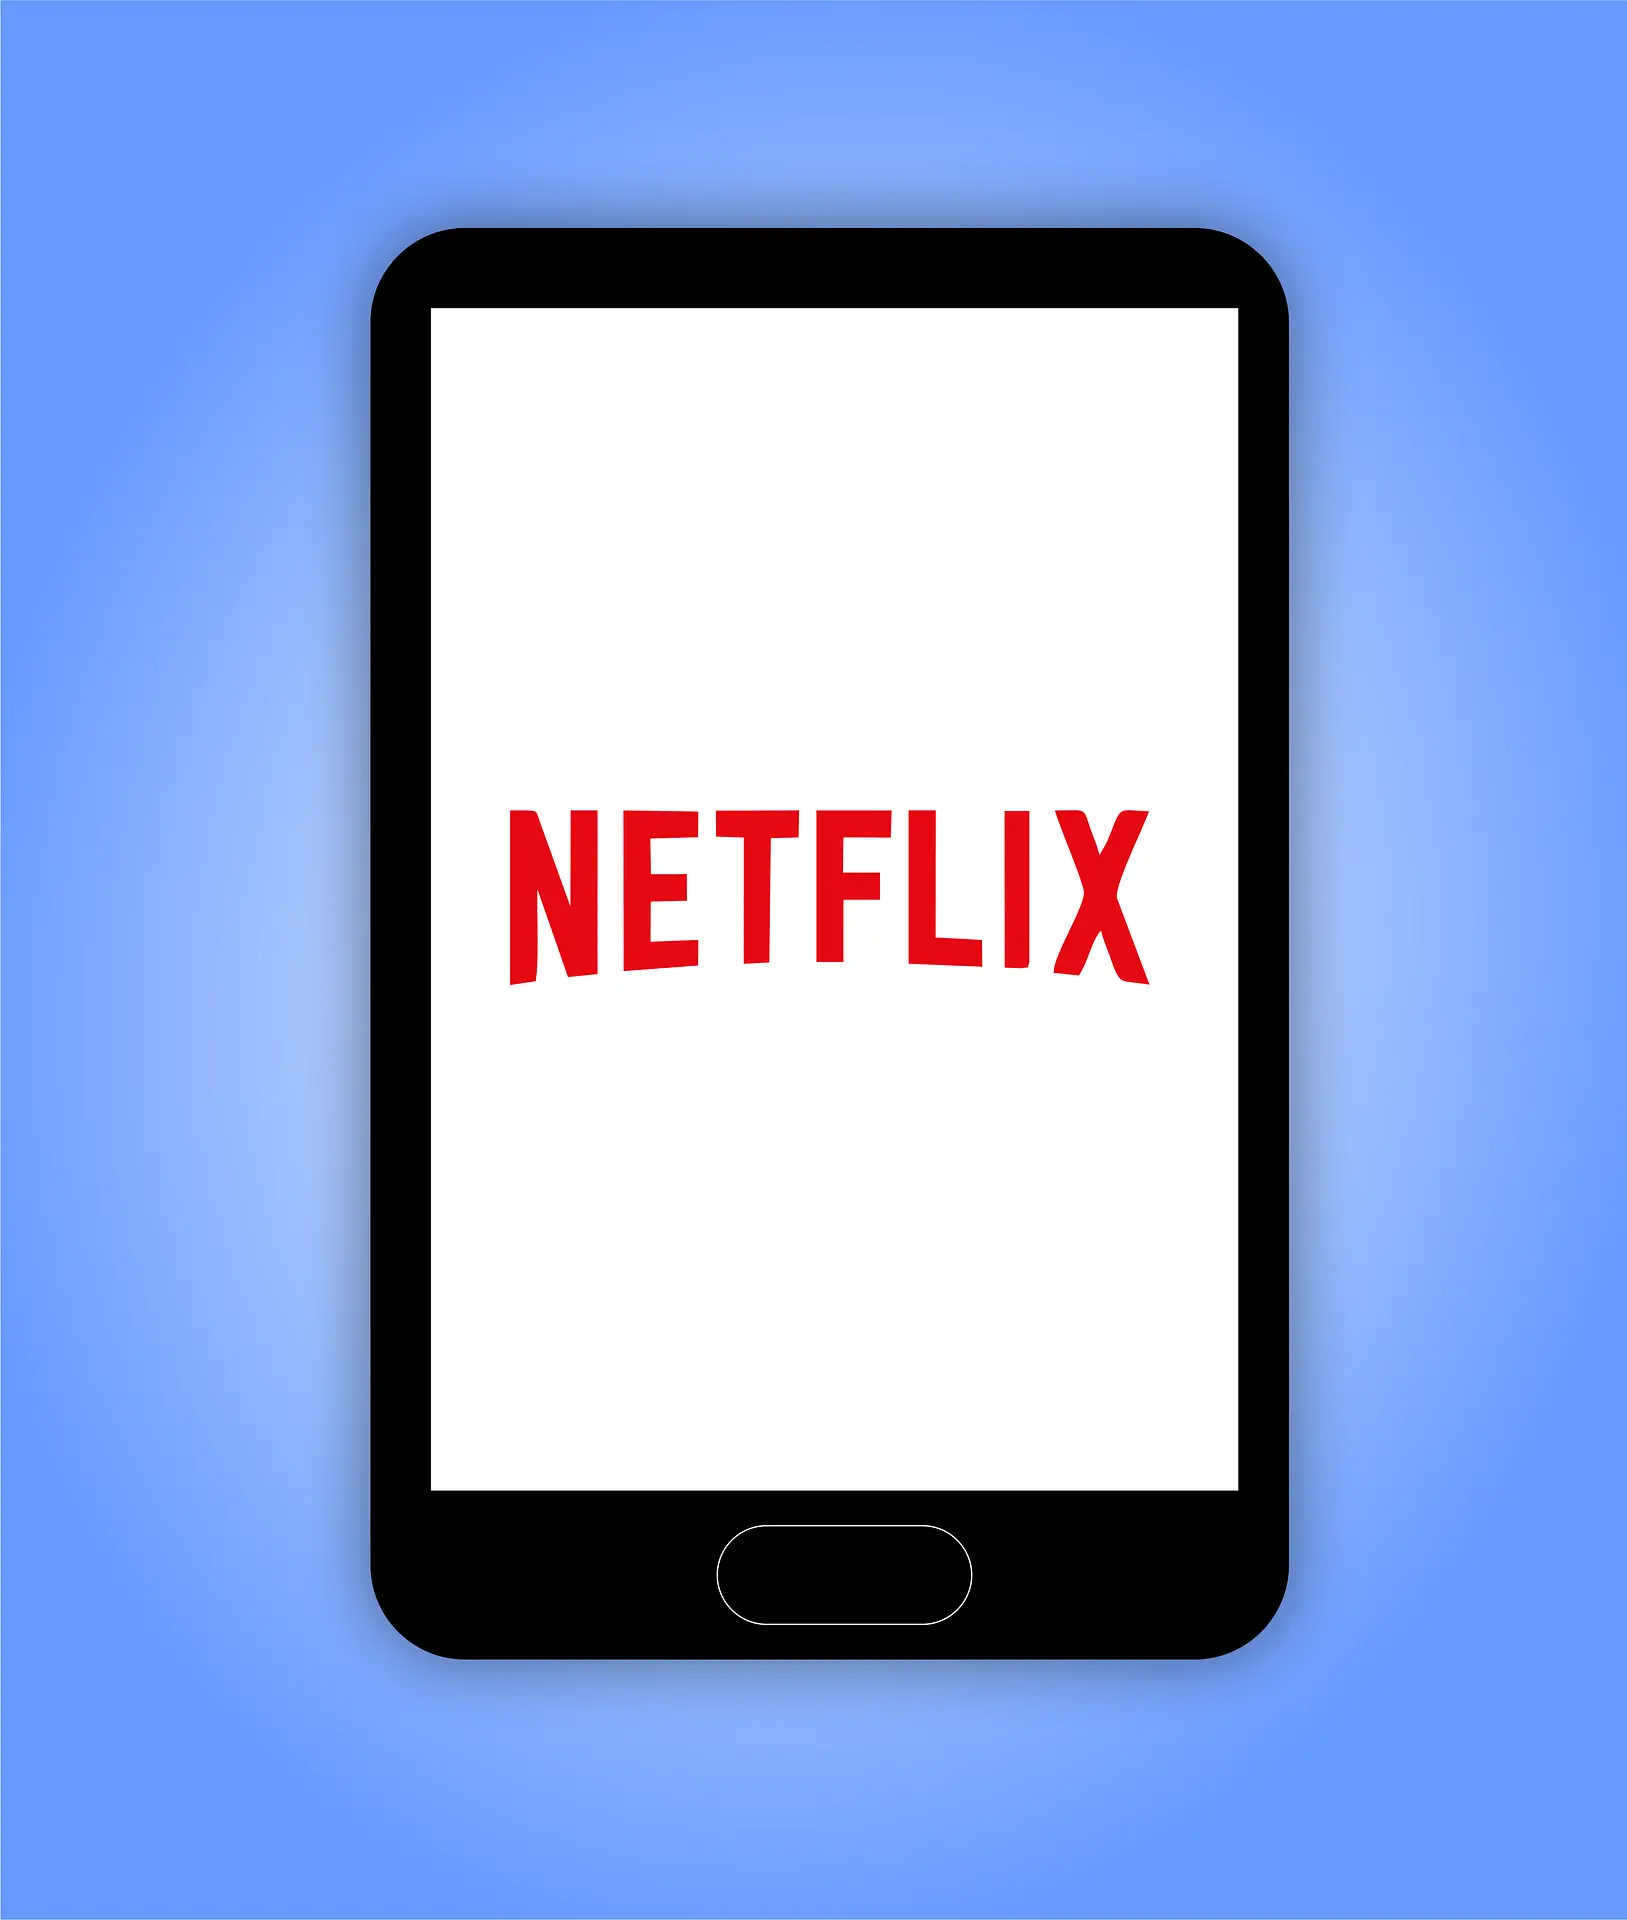 Netflix android app logo screen